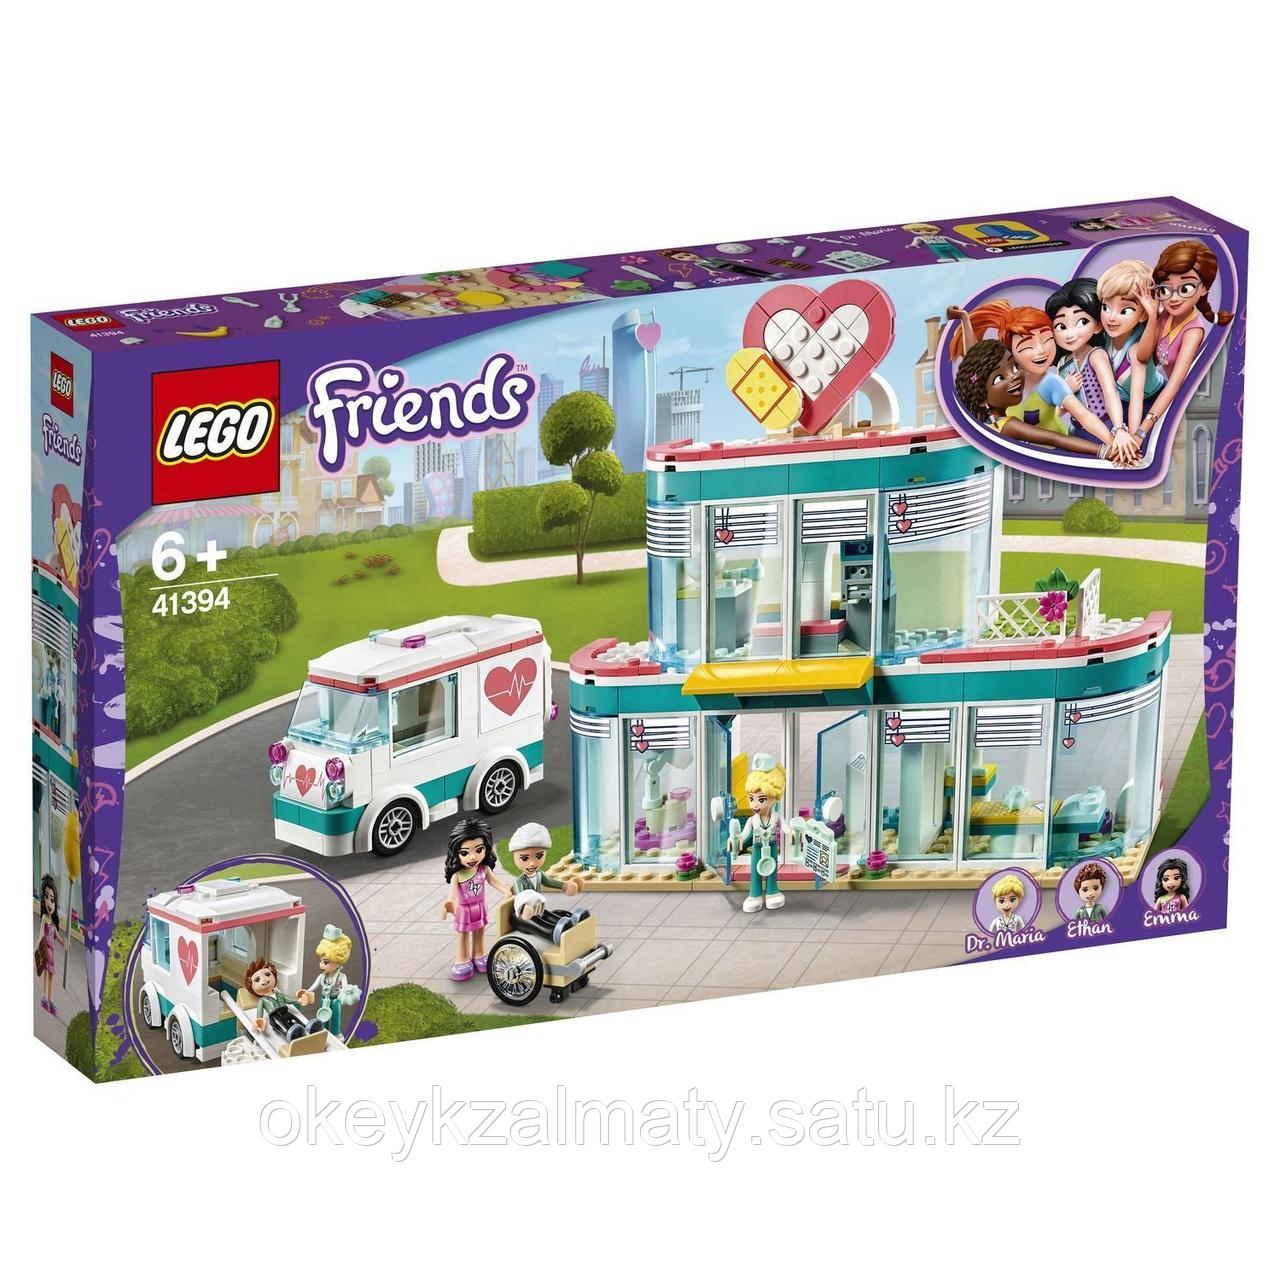 LEGO Friends: Городская больница Хартлейк Сити 41394